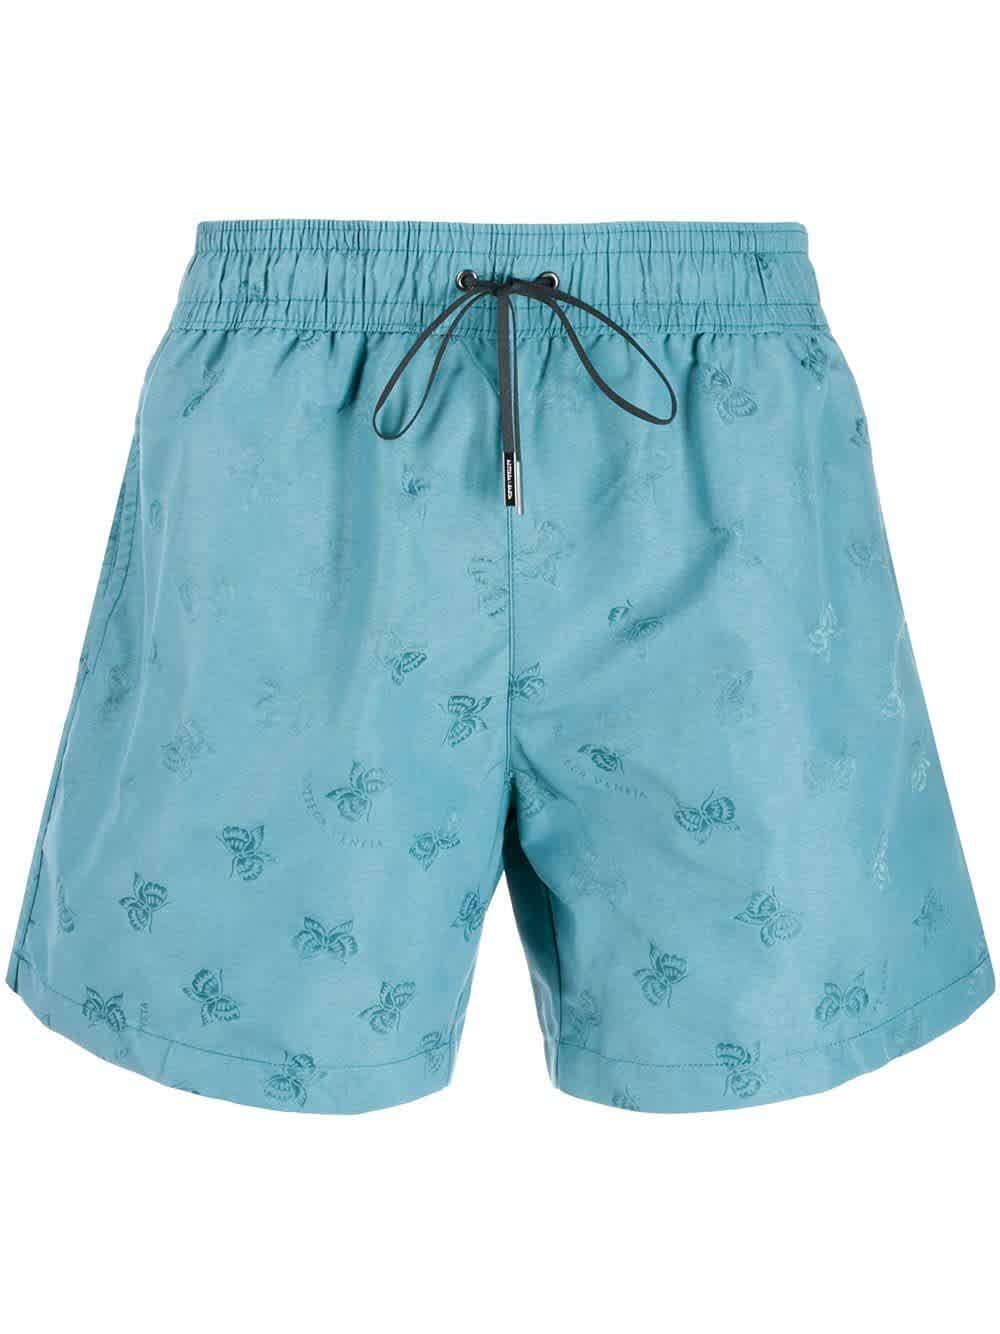 Bottega Veneta Butterfly Motif Swim Shorts in Blue for Men - Save 49% ...